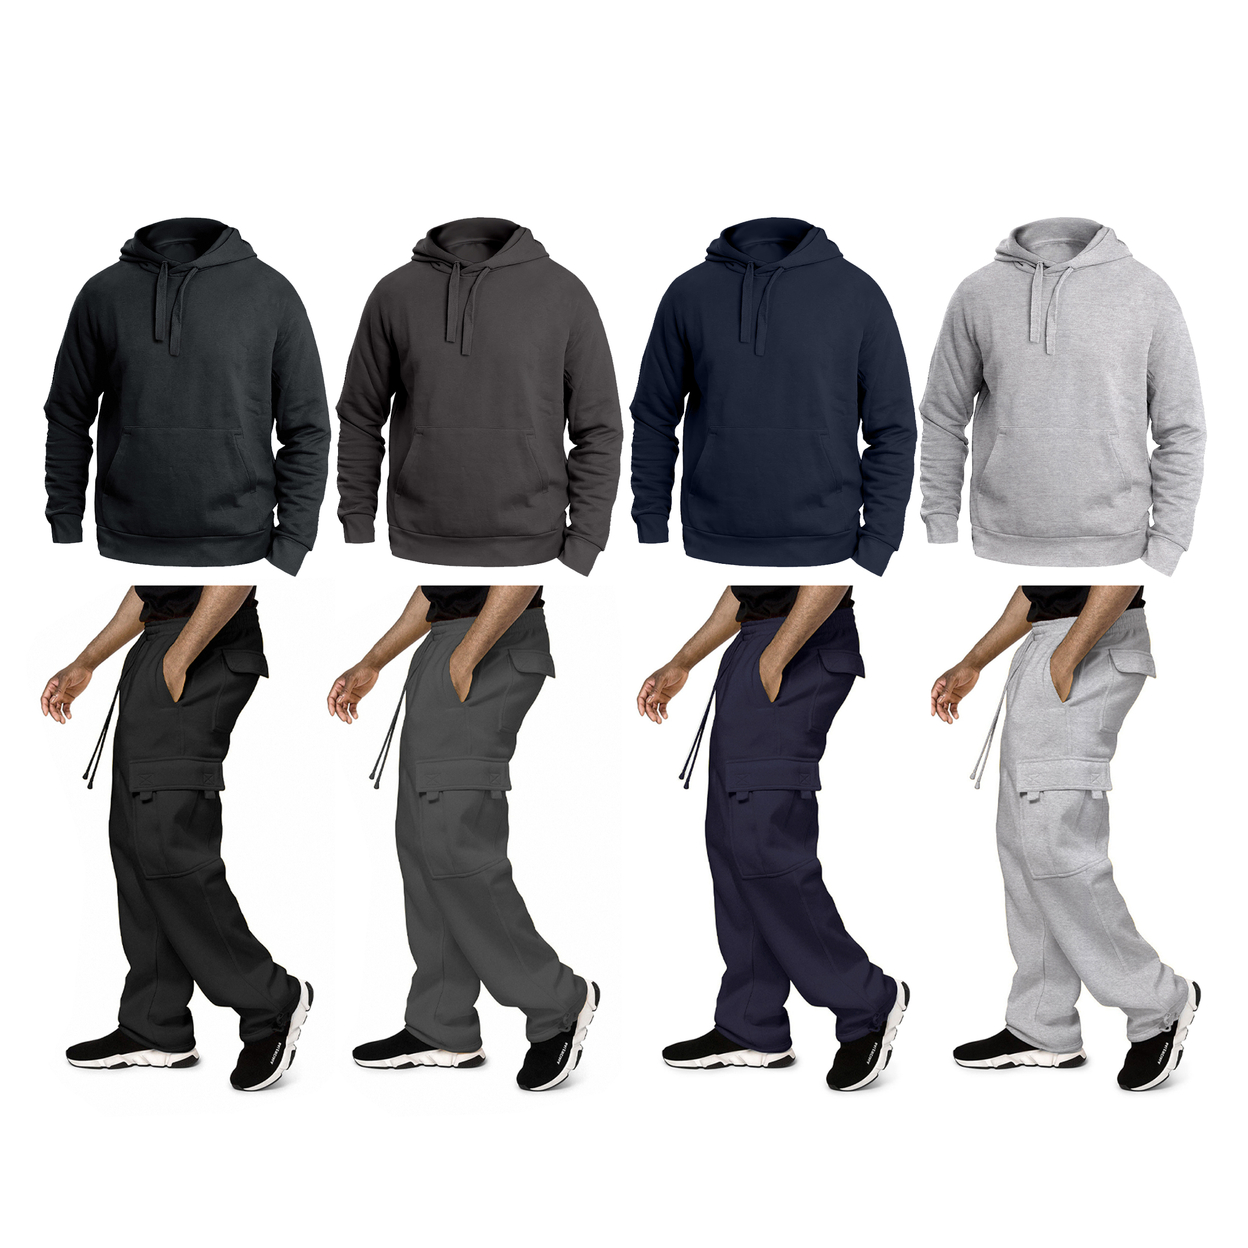 2-Pack: Men's Big & Tall Winter Warm Cozy Athletic Fleece Lined Multi-Pocket Cargo Sweatsuit - Navy, Medium